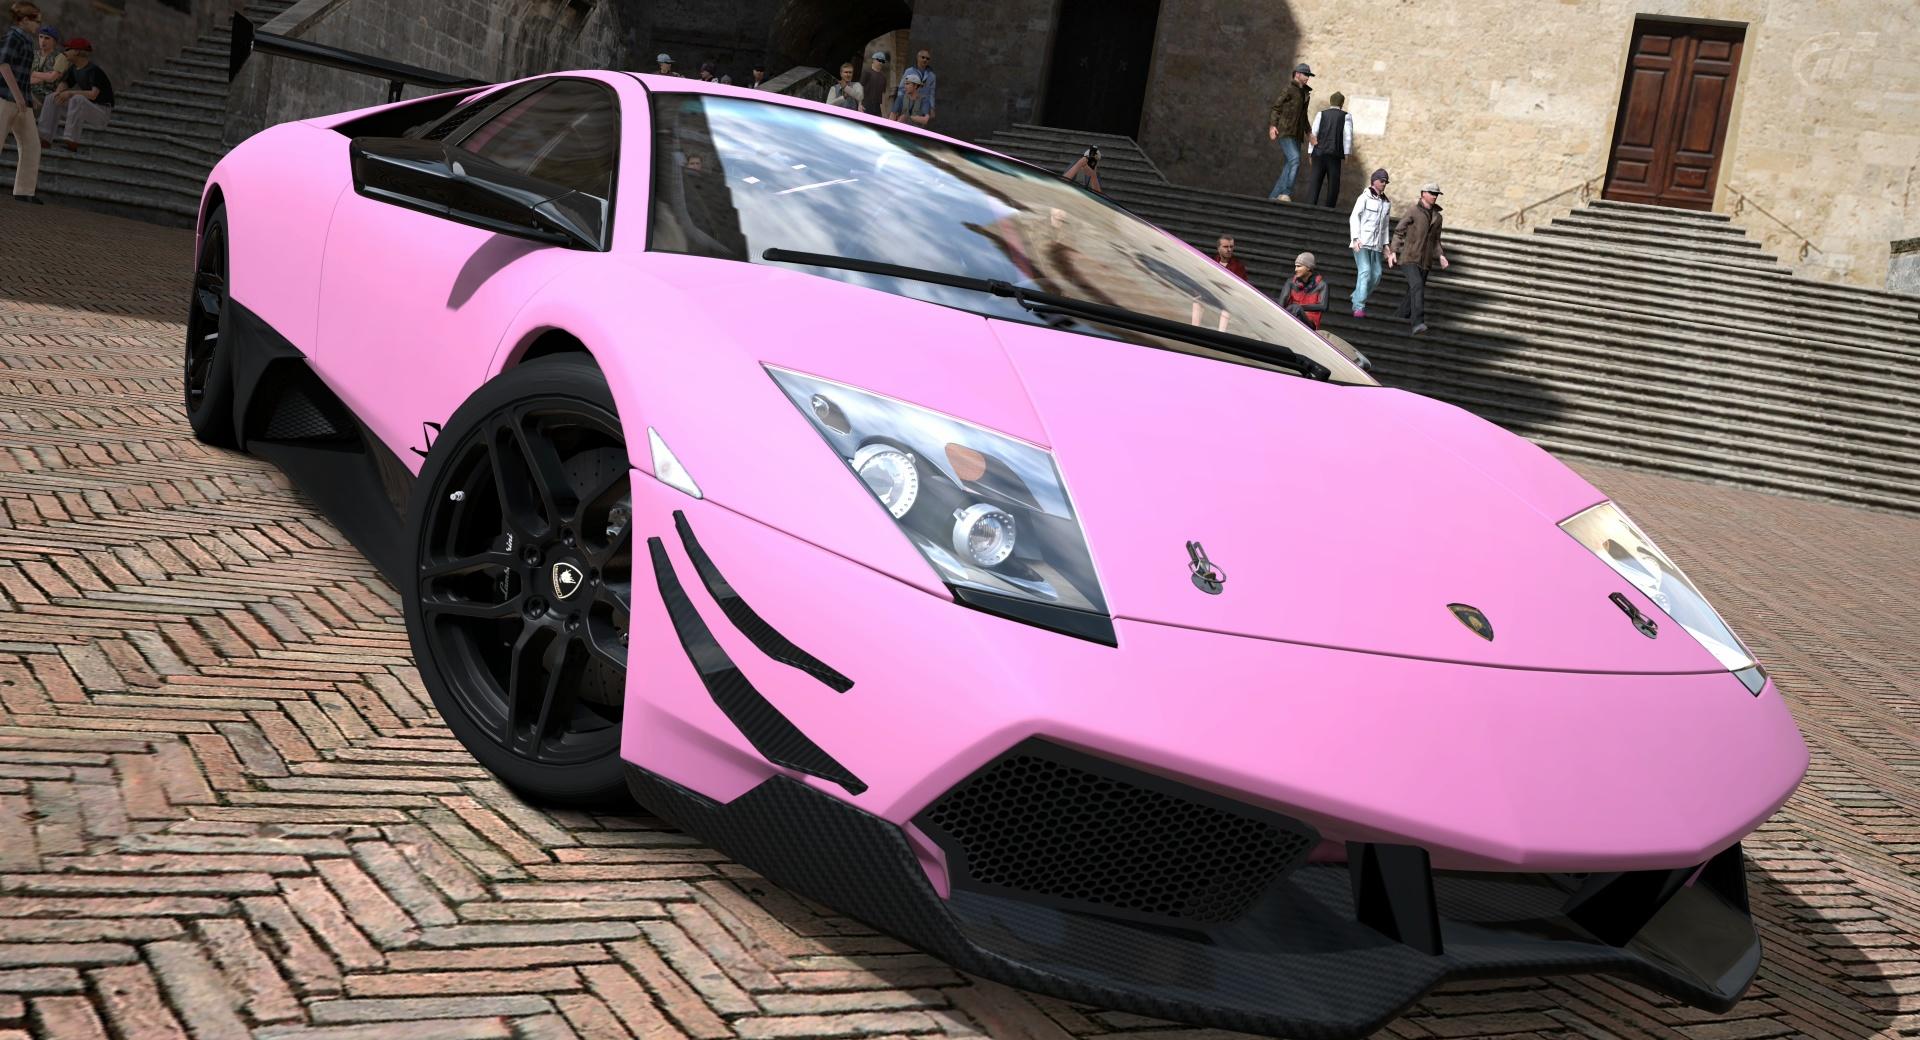 Lamborghini Murcielago LP670-4 SV Matte Pink at 1280 x 960 size wallpapers HD quality